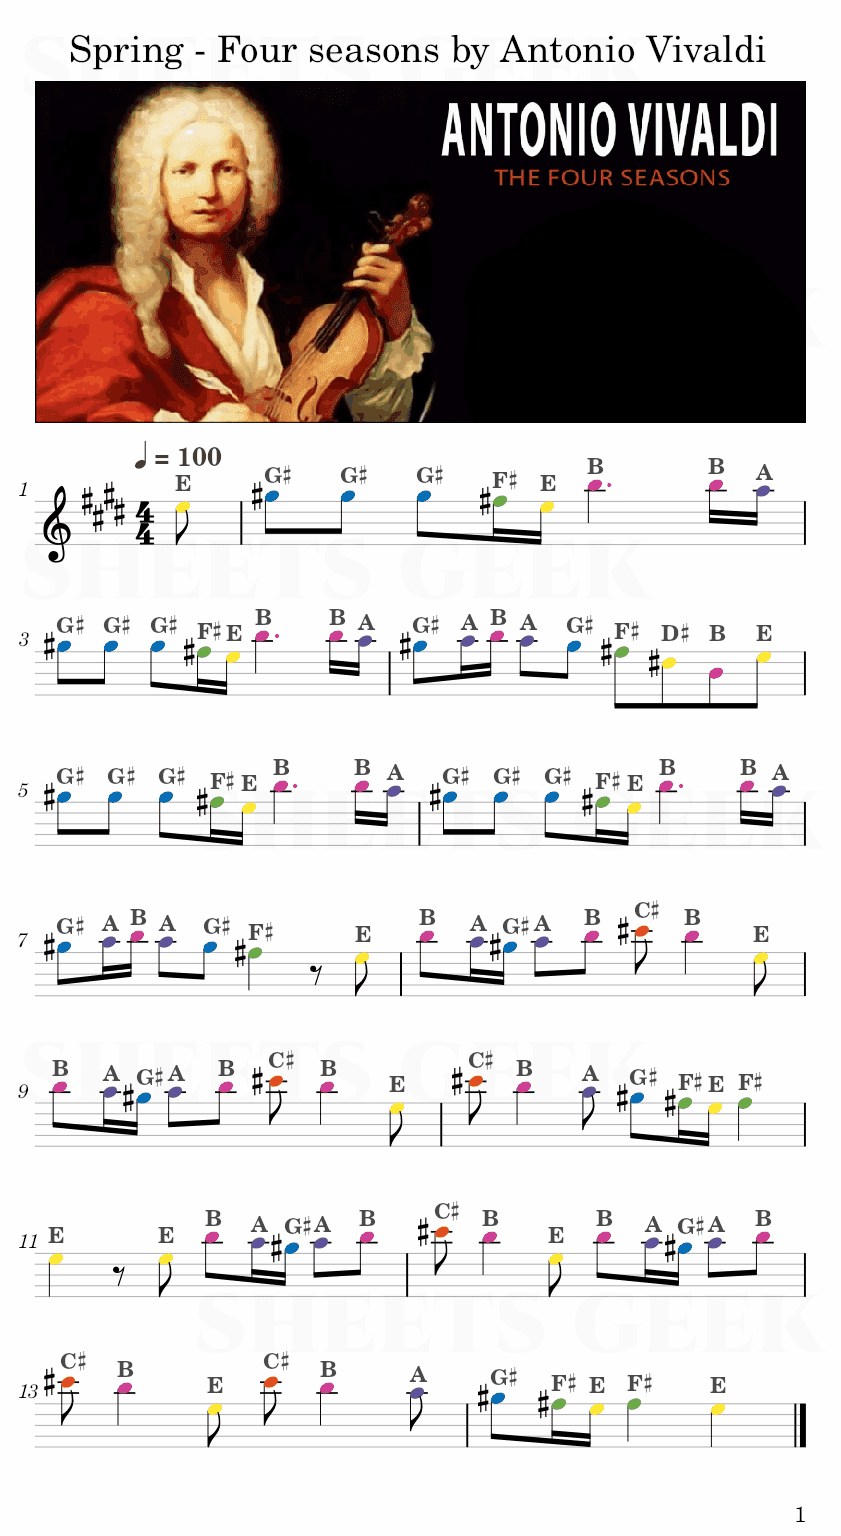 Spring - Four seasons by Antonio Vivaldi Easy Sheet Music Free for piano, keyboard, flute, violin, sax, cello page 1